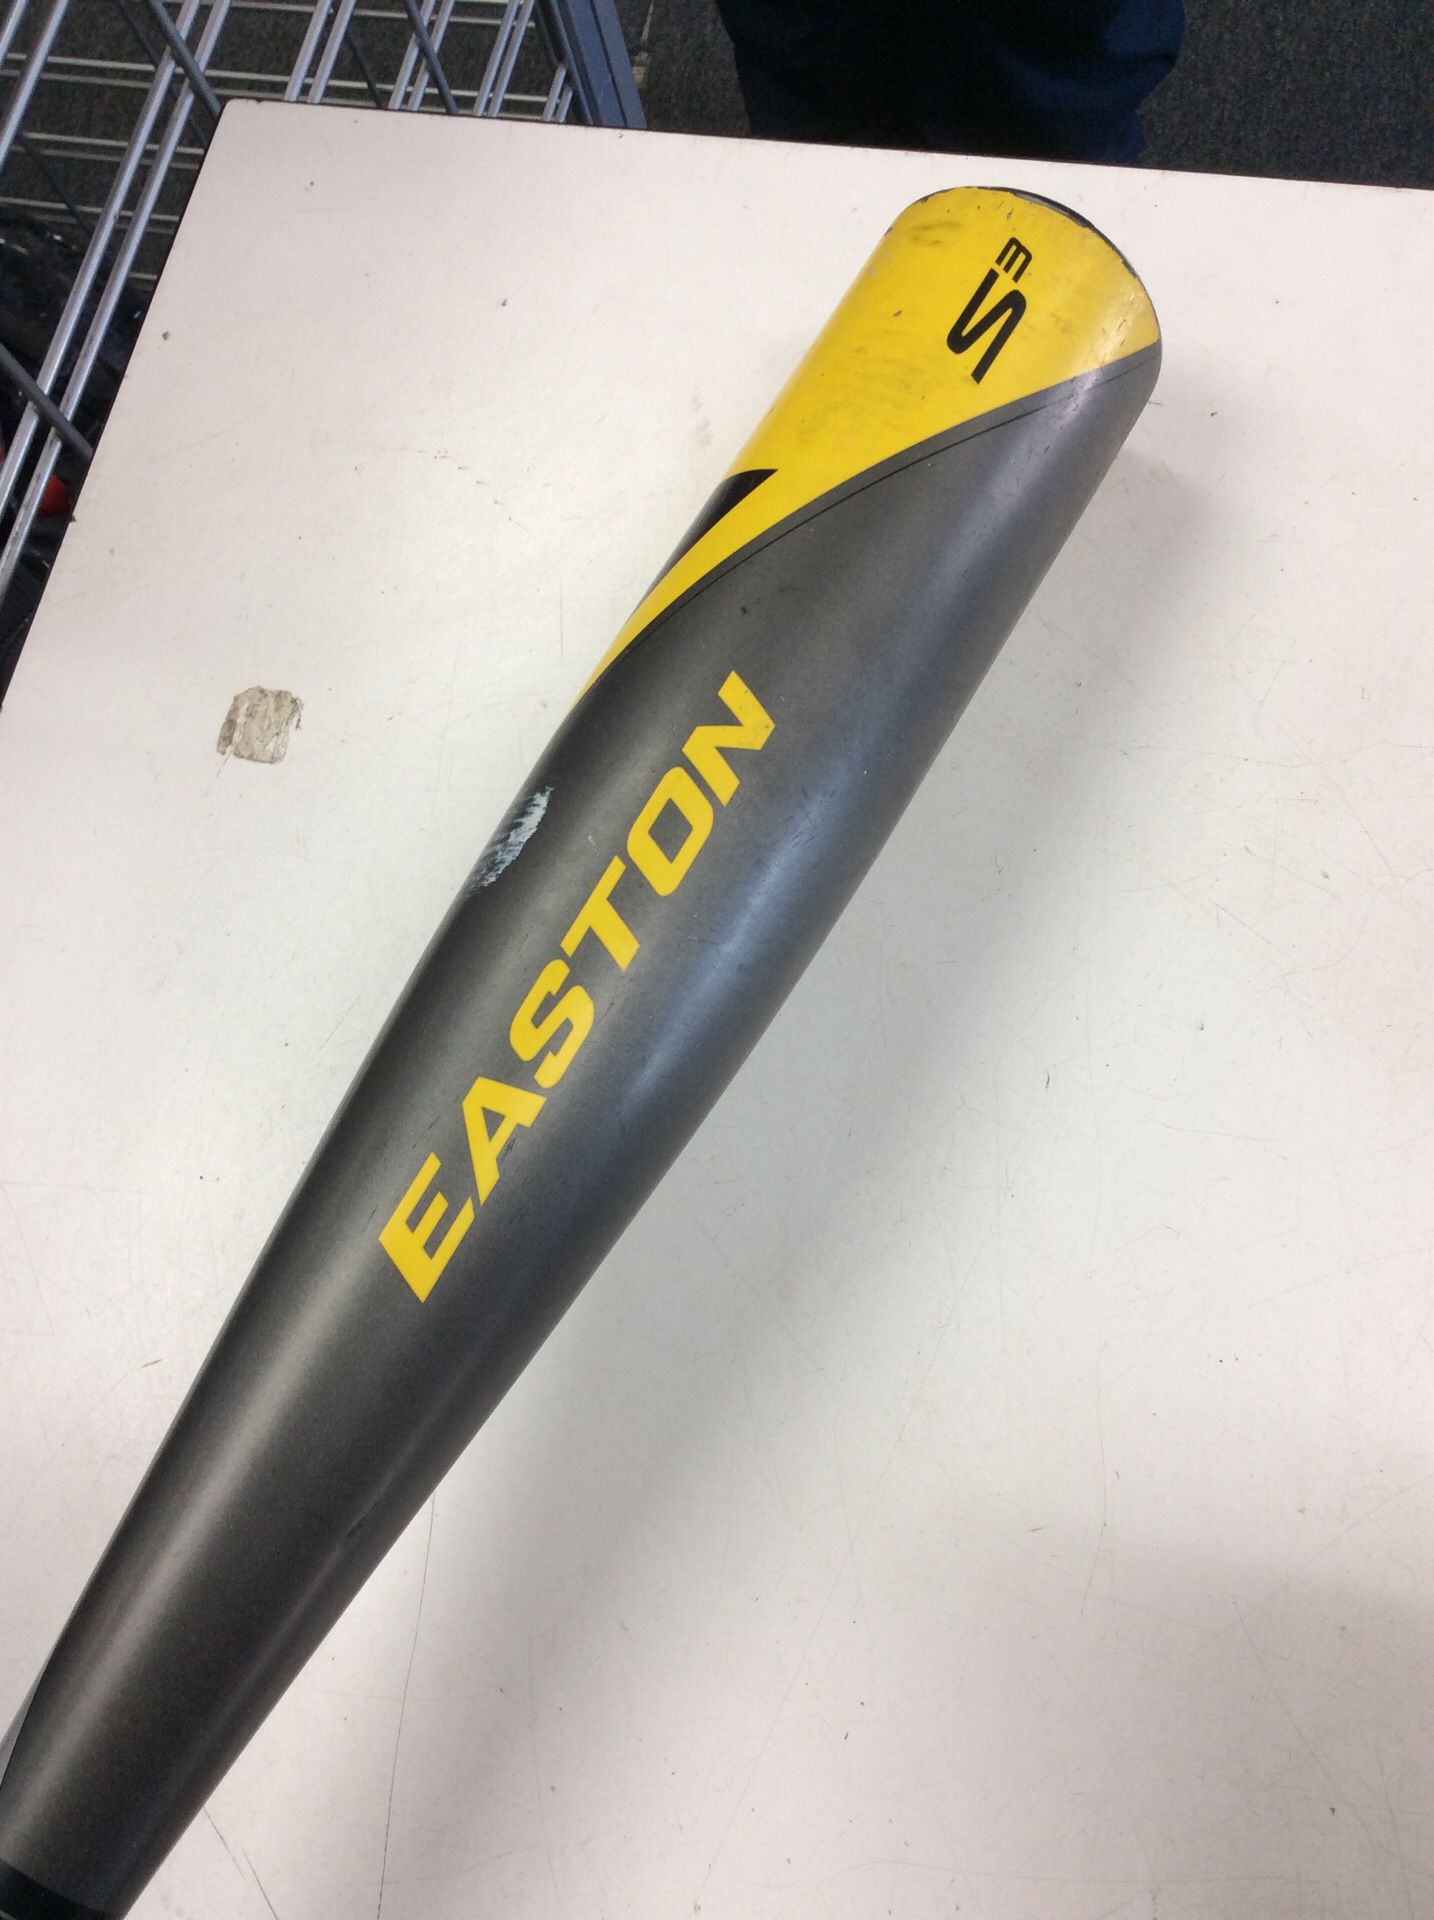 Easton Senior League S3 USSSA Baseball Bat 30 (-10) 2 3/4” - Good Condition - Pick up only